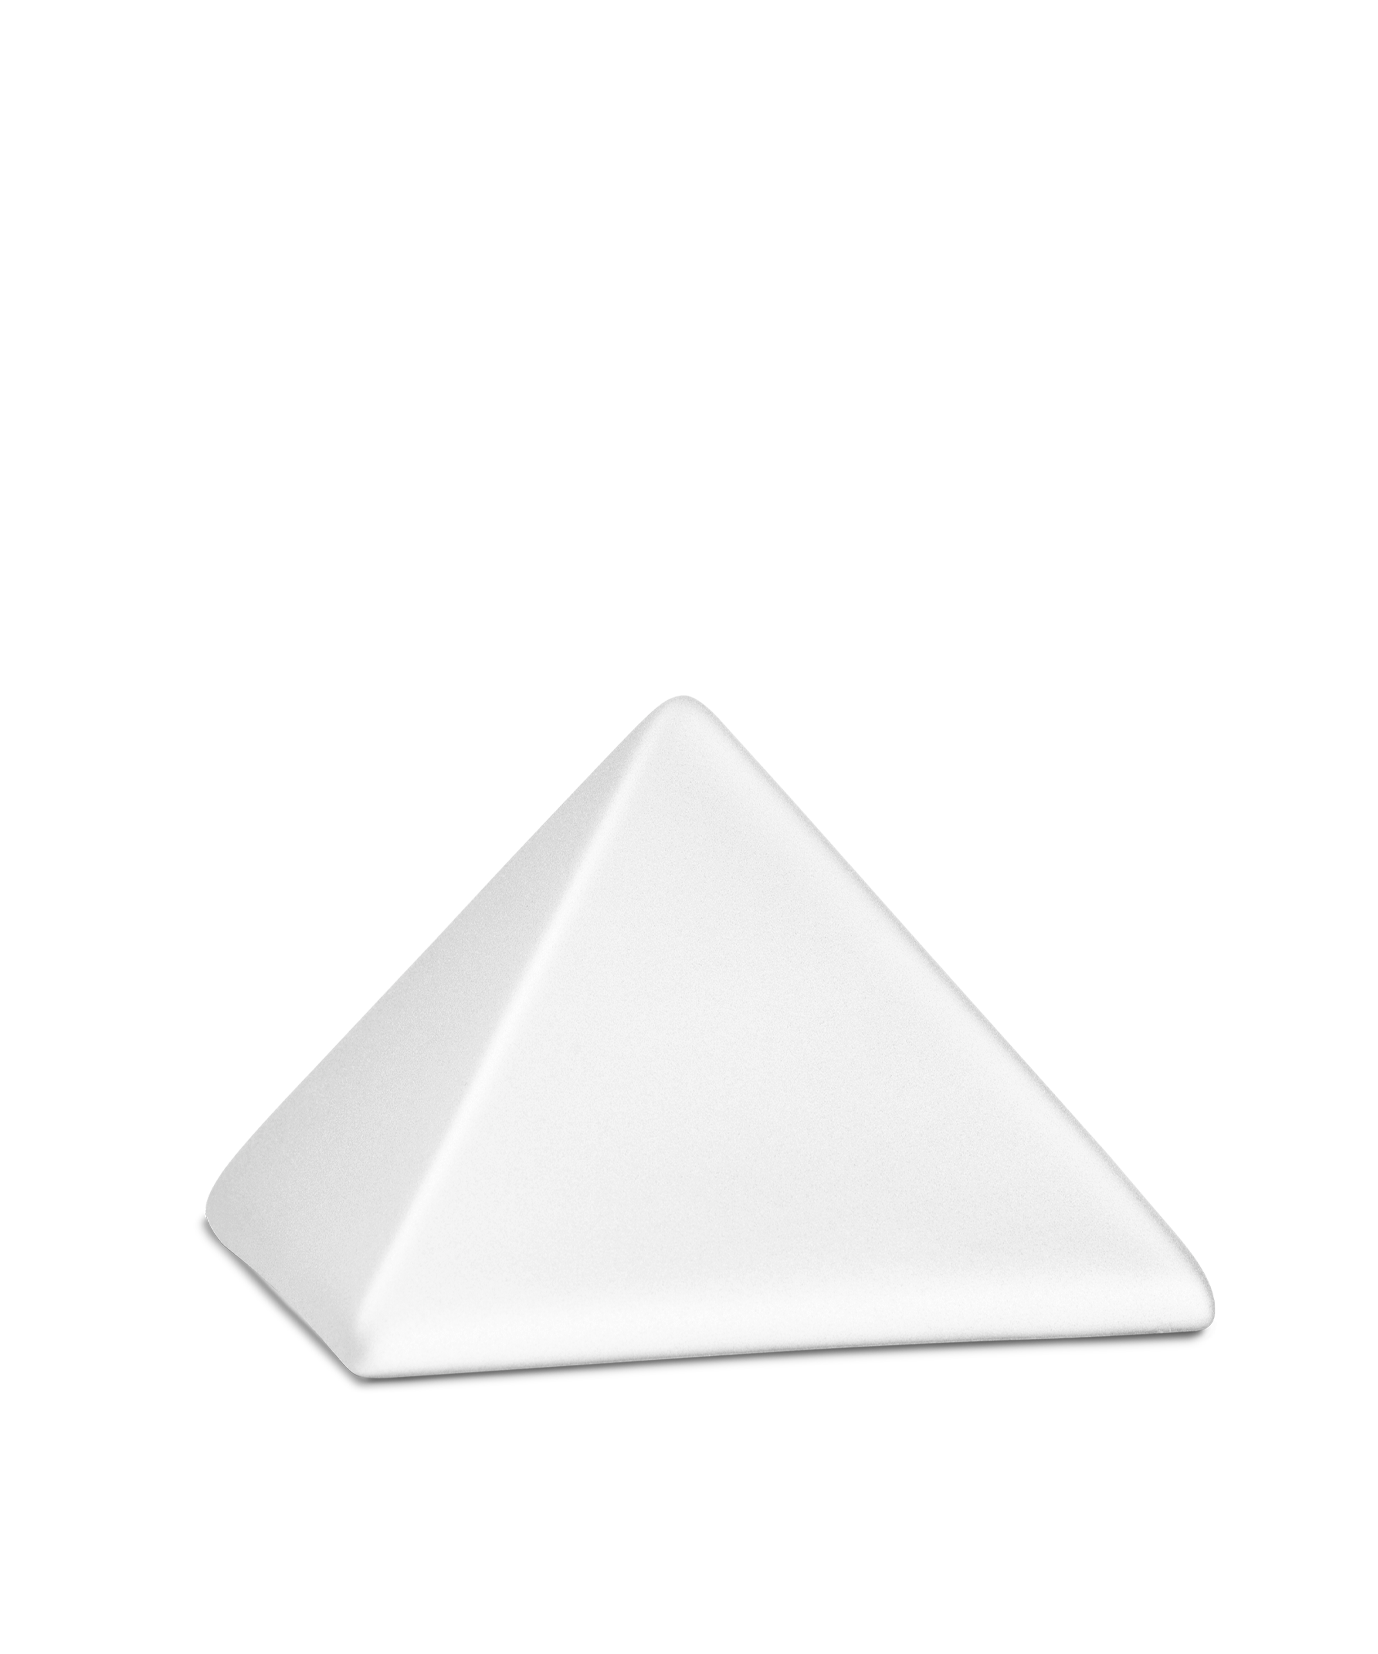 Tierurne - Keramik Pyramide weiß 500ml